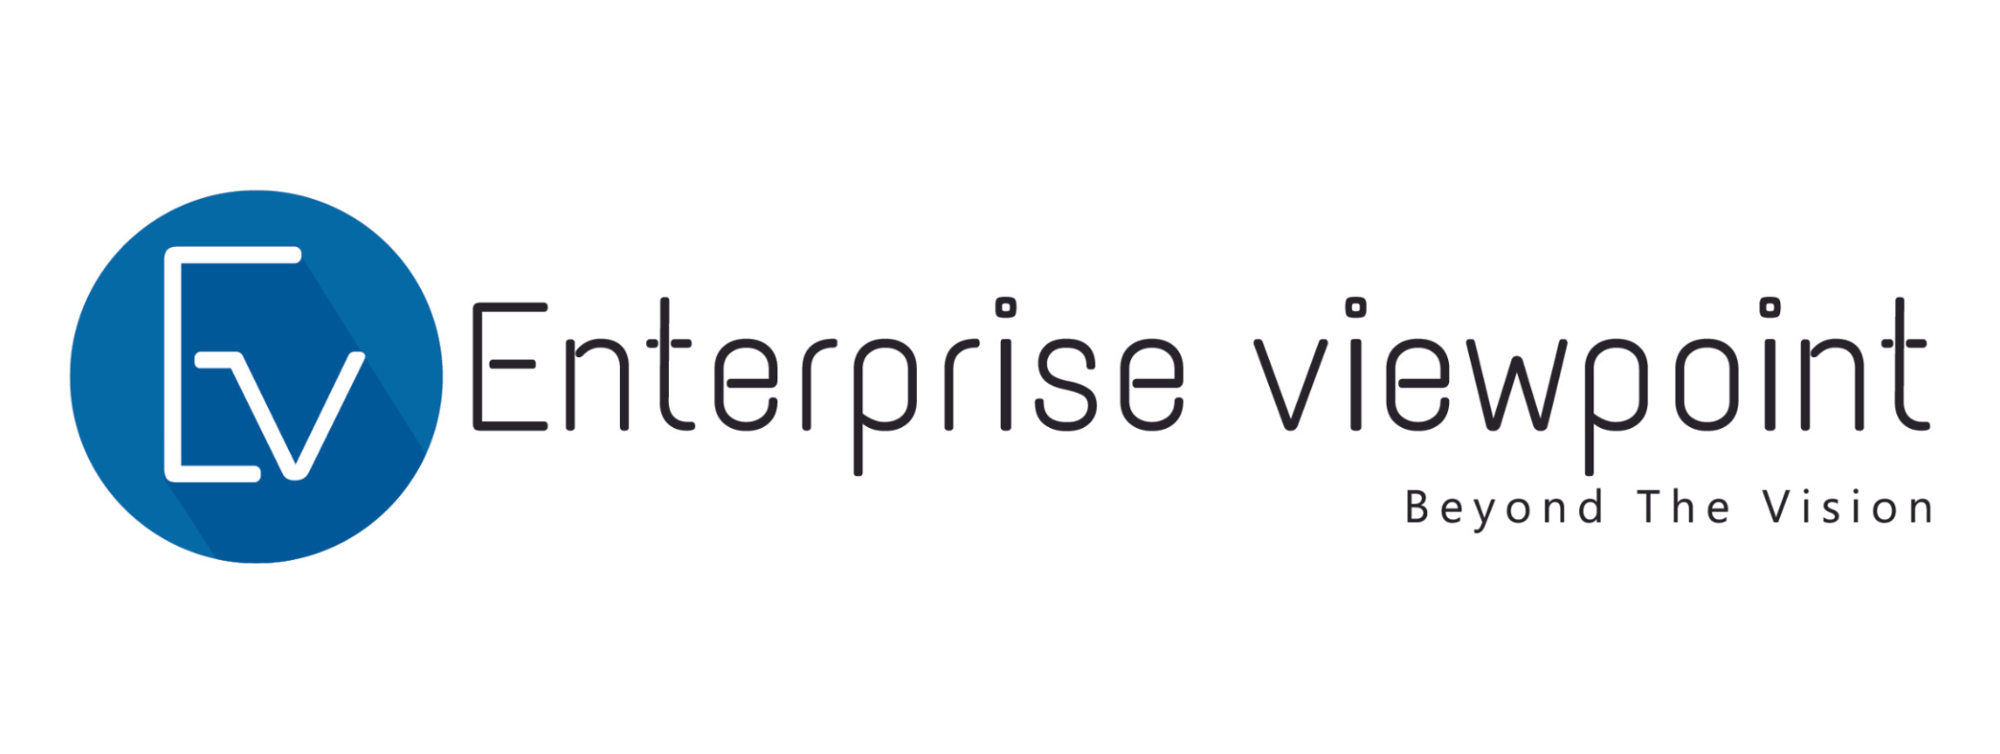 Enterprise Viewpoint